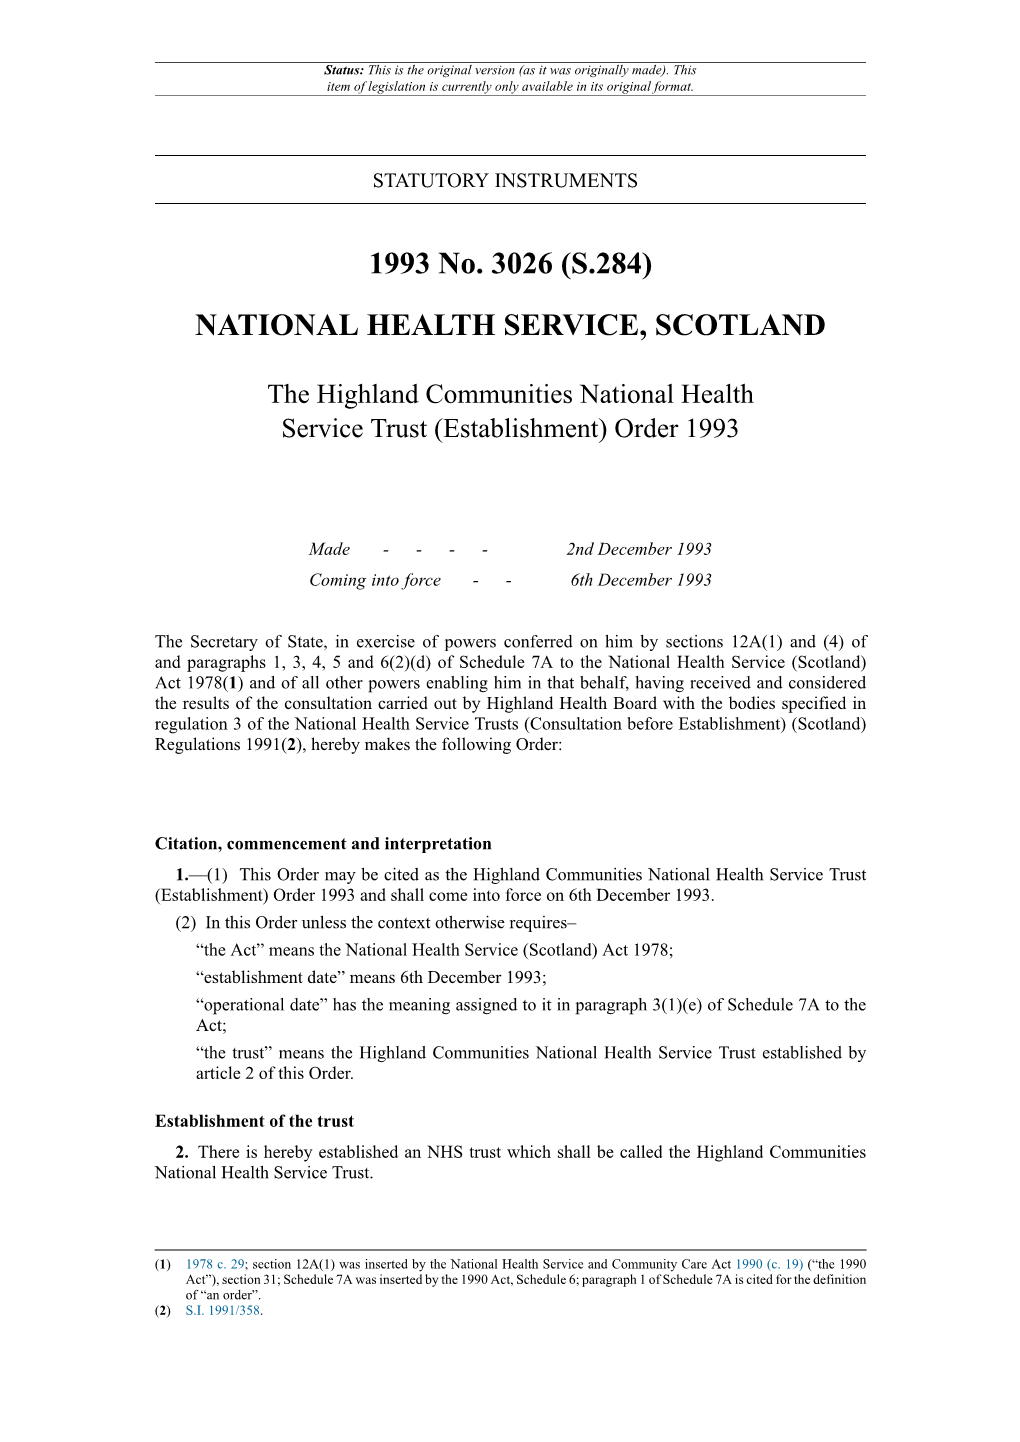 The Highland Communities National Health Service Trust (Establishment) Order 1993